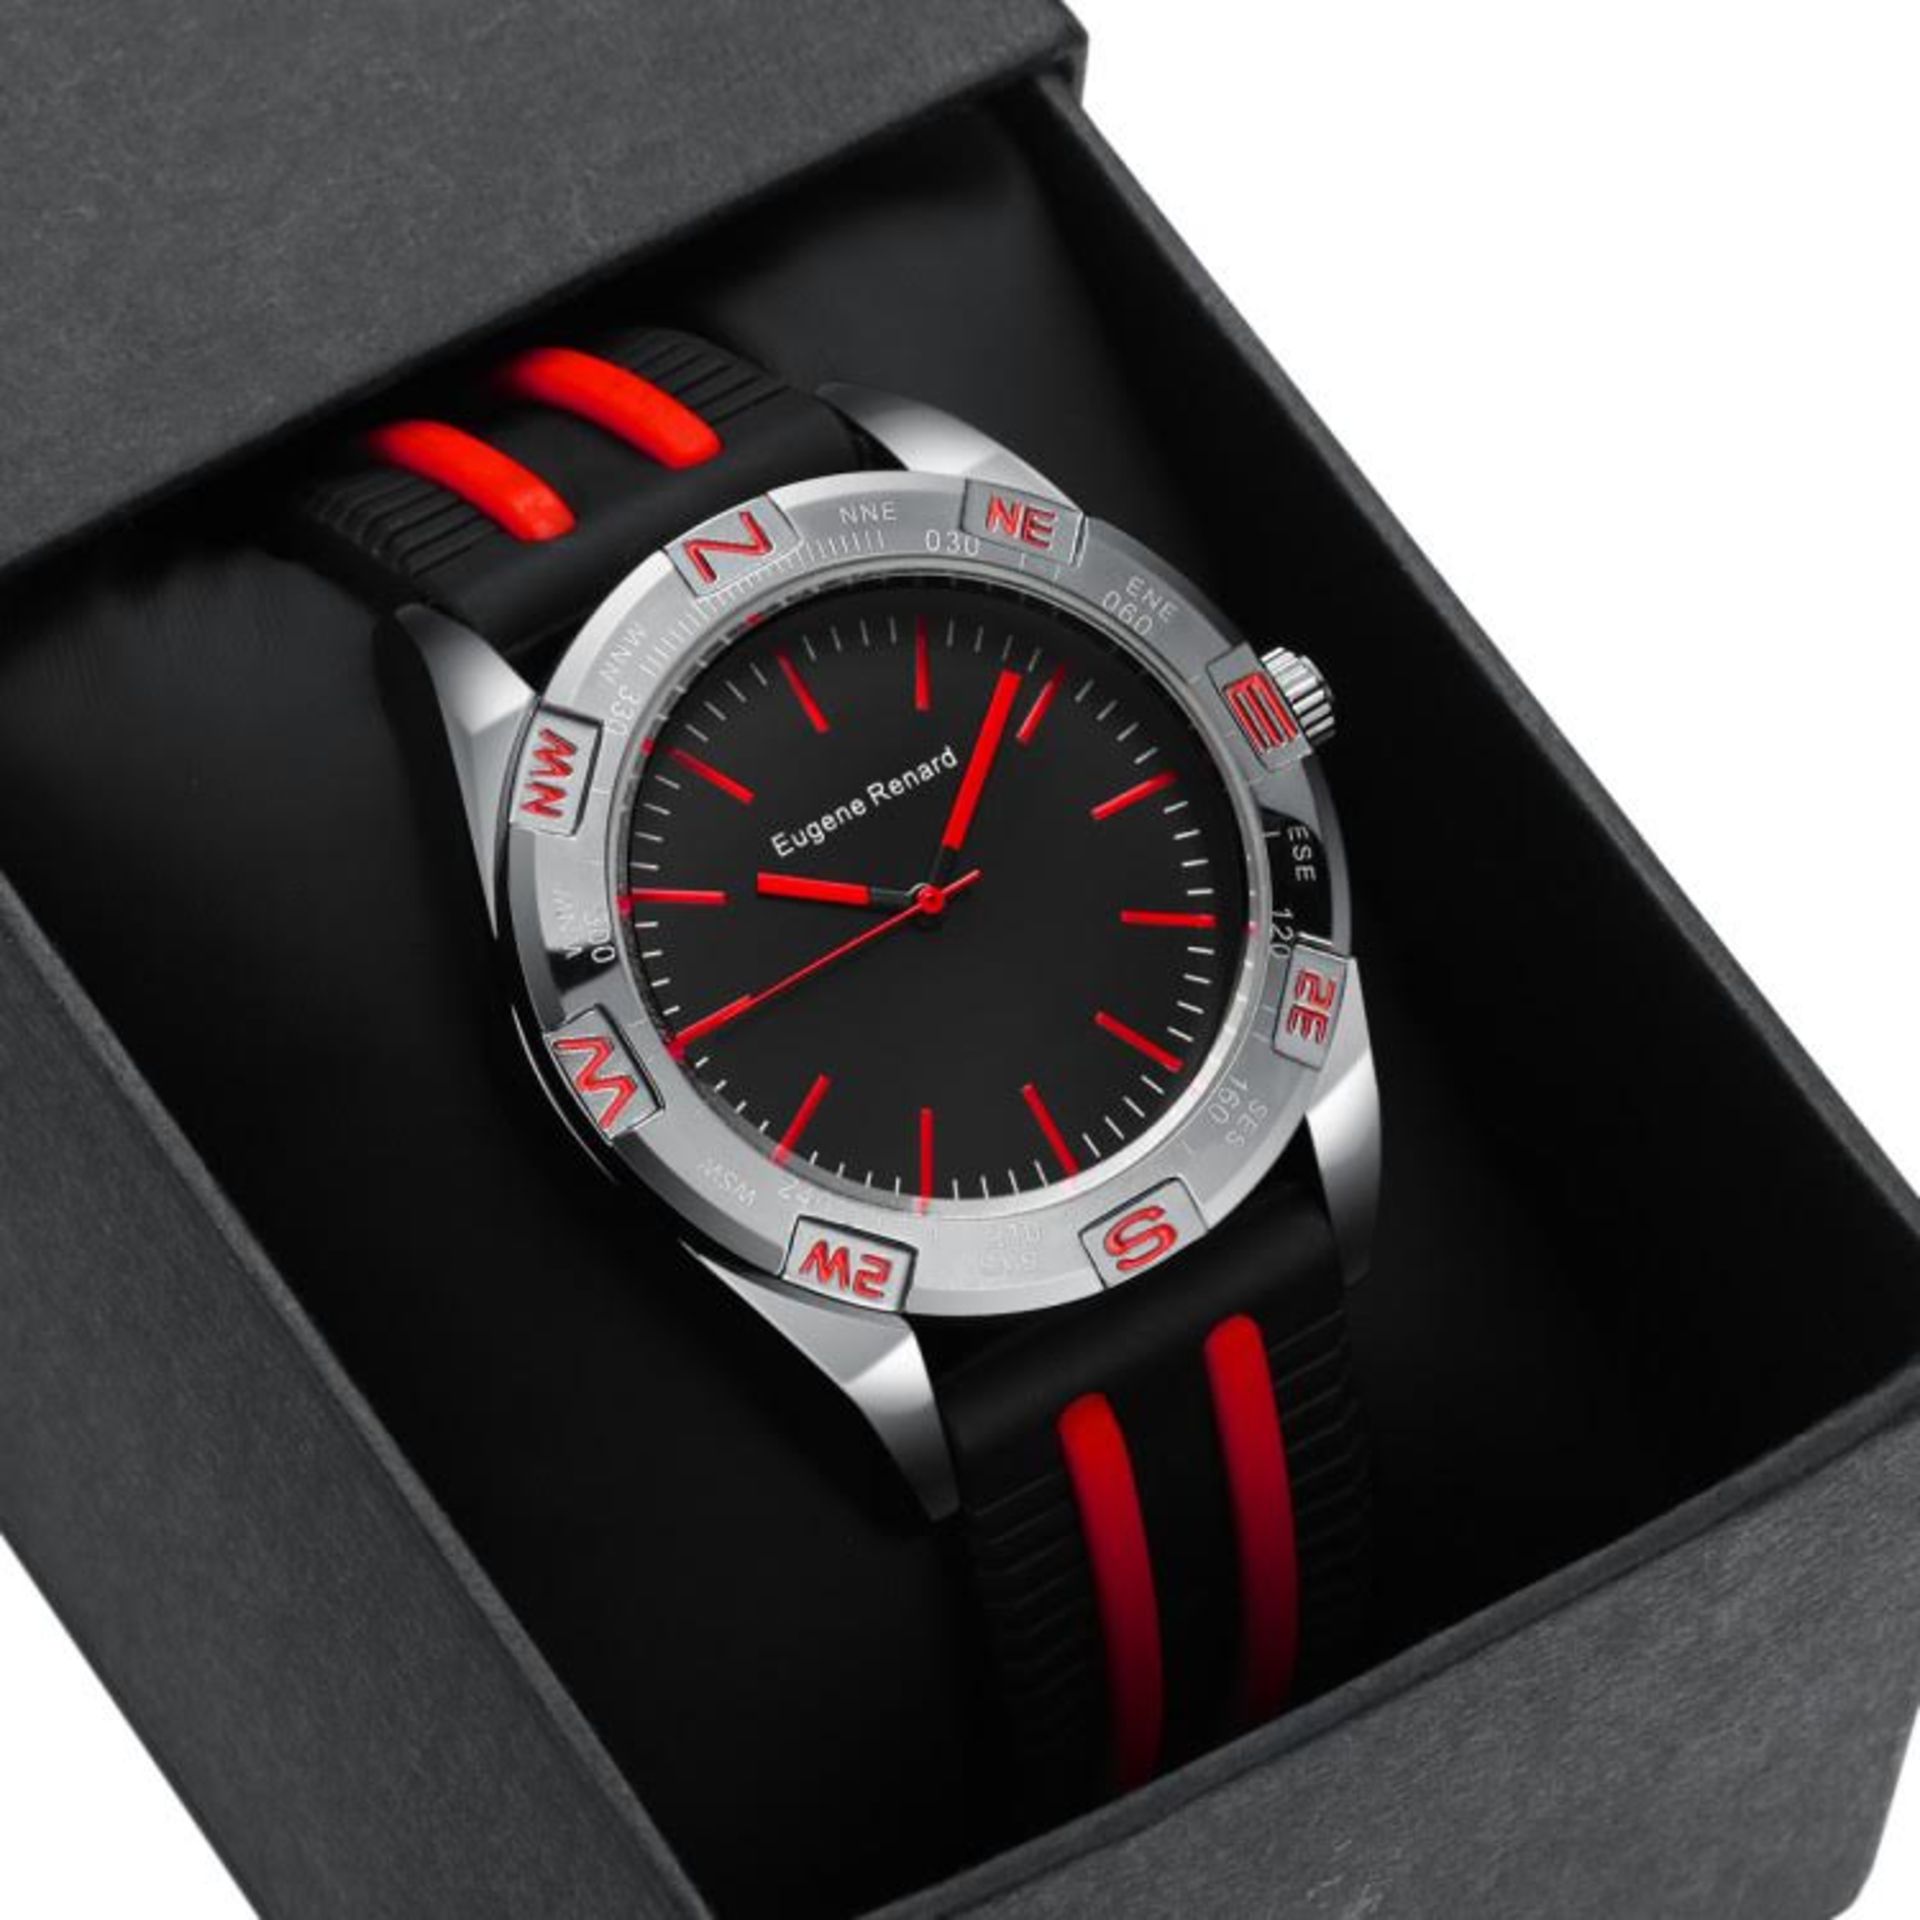 V *TRADE QTY* Brand New Gents Eugene Renard Timepiece Model X - Black Face - Red Indices - Red/Black